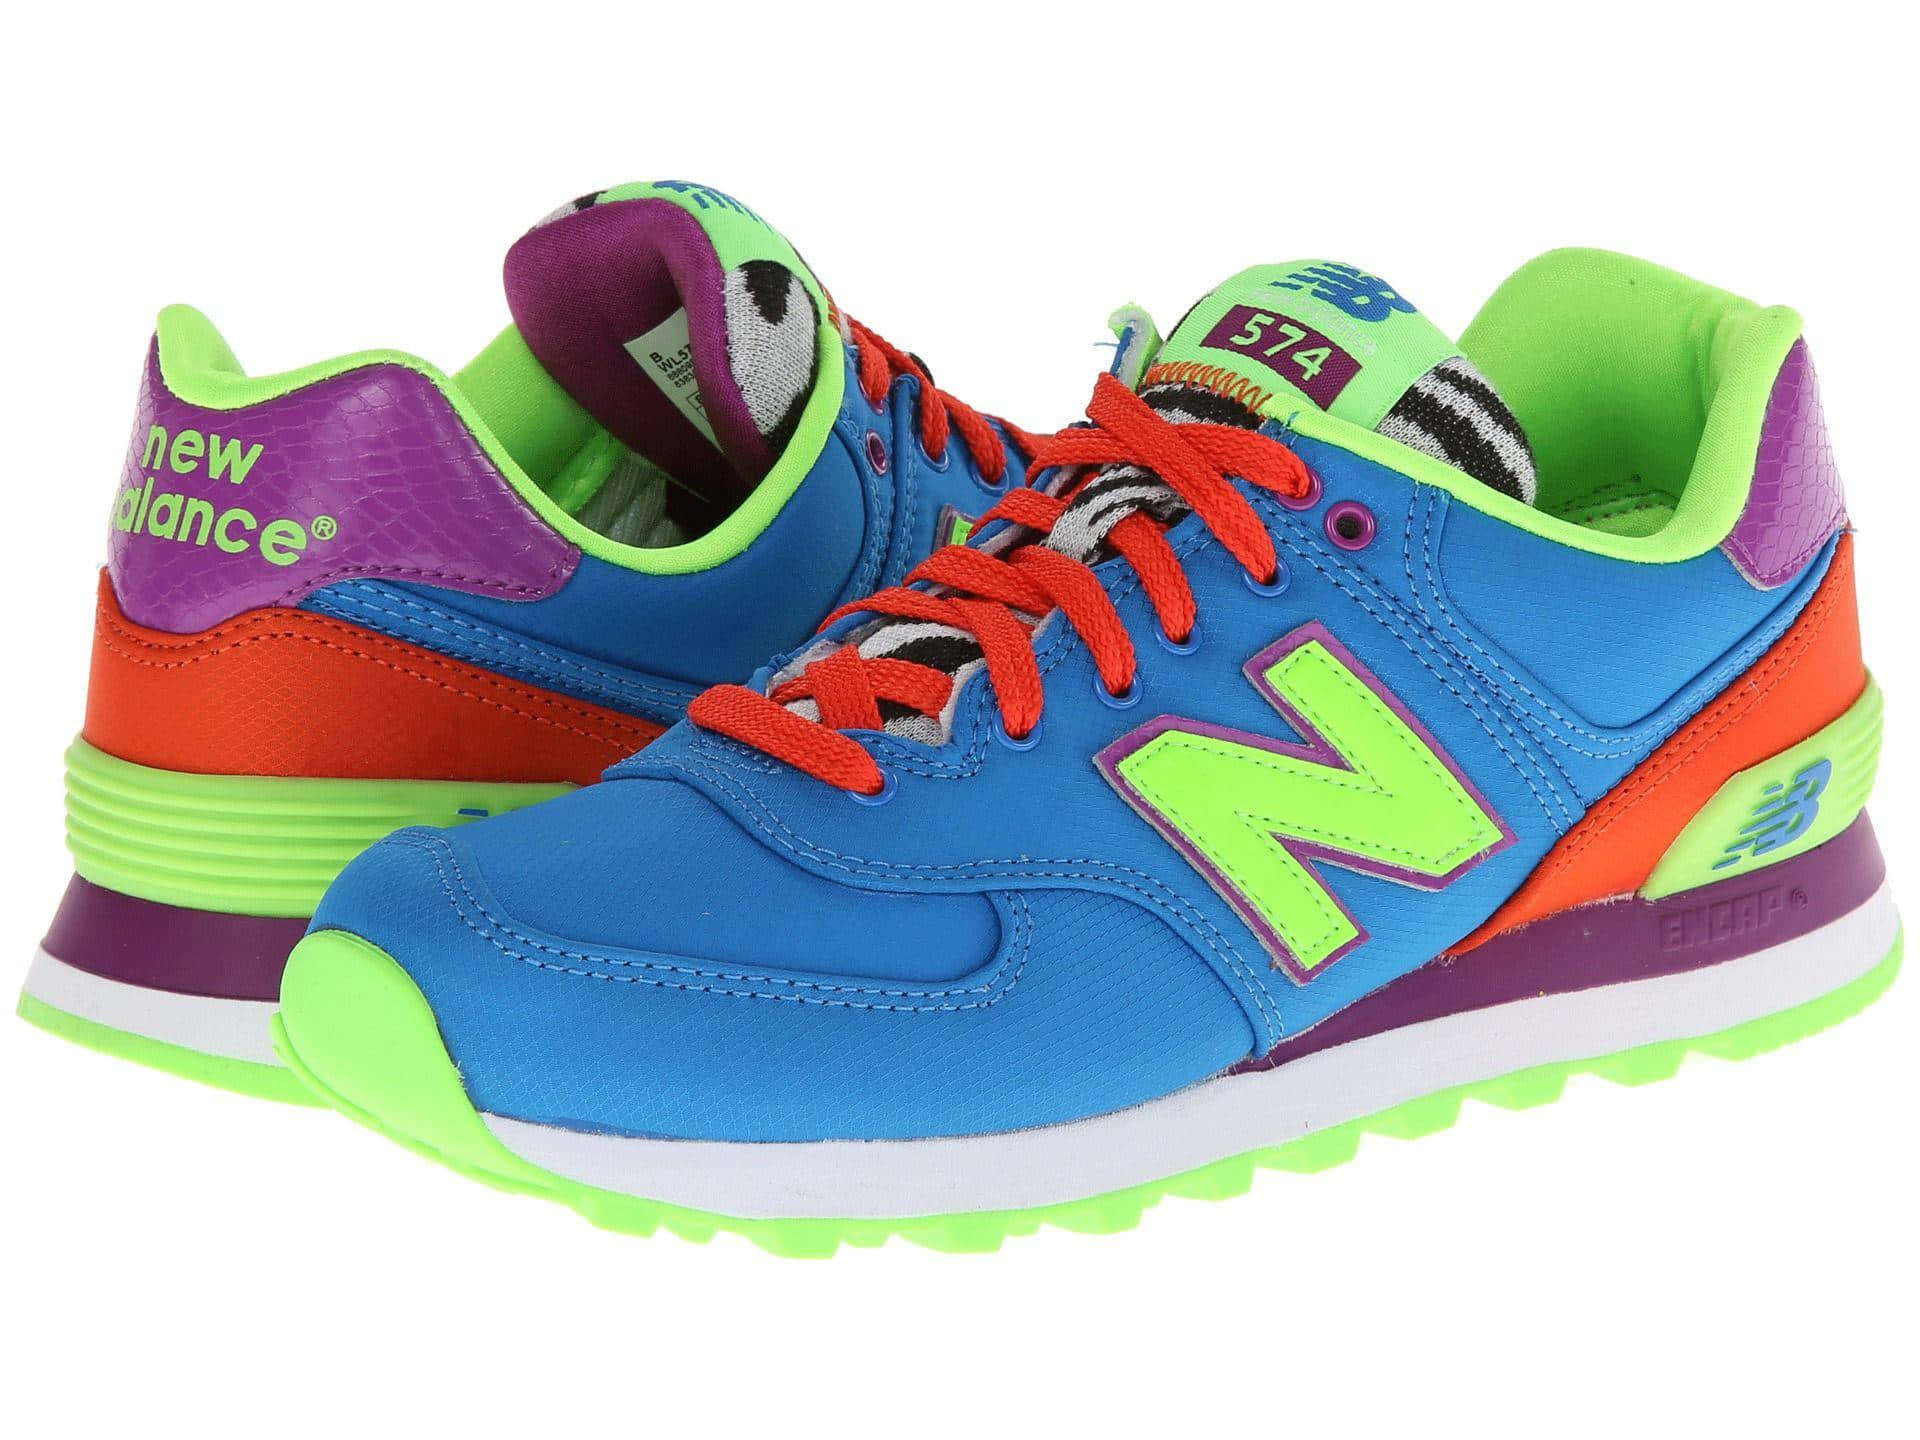 New Balance 574 - Blue/green/purple Women's Shoes